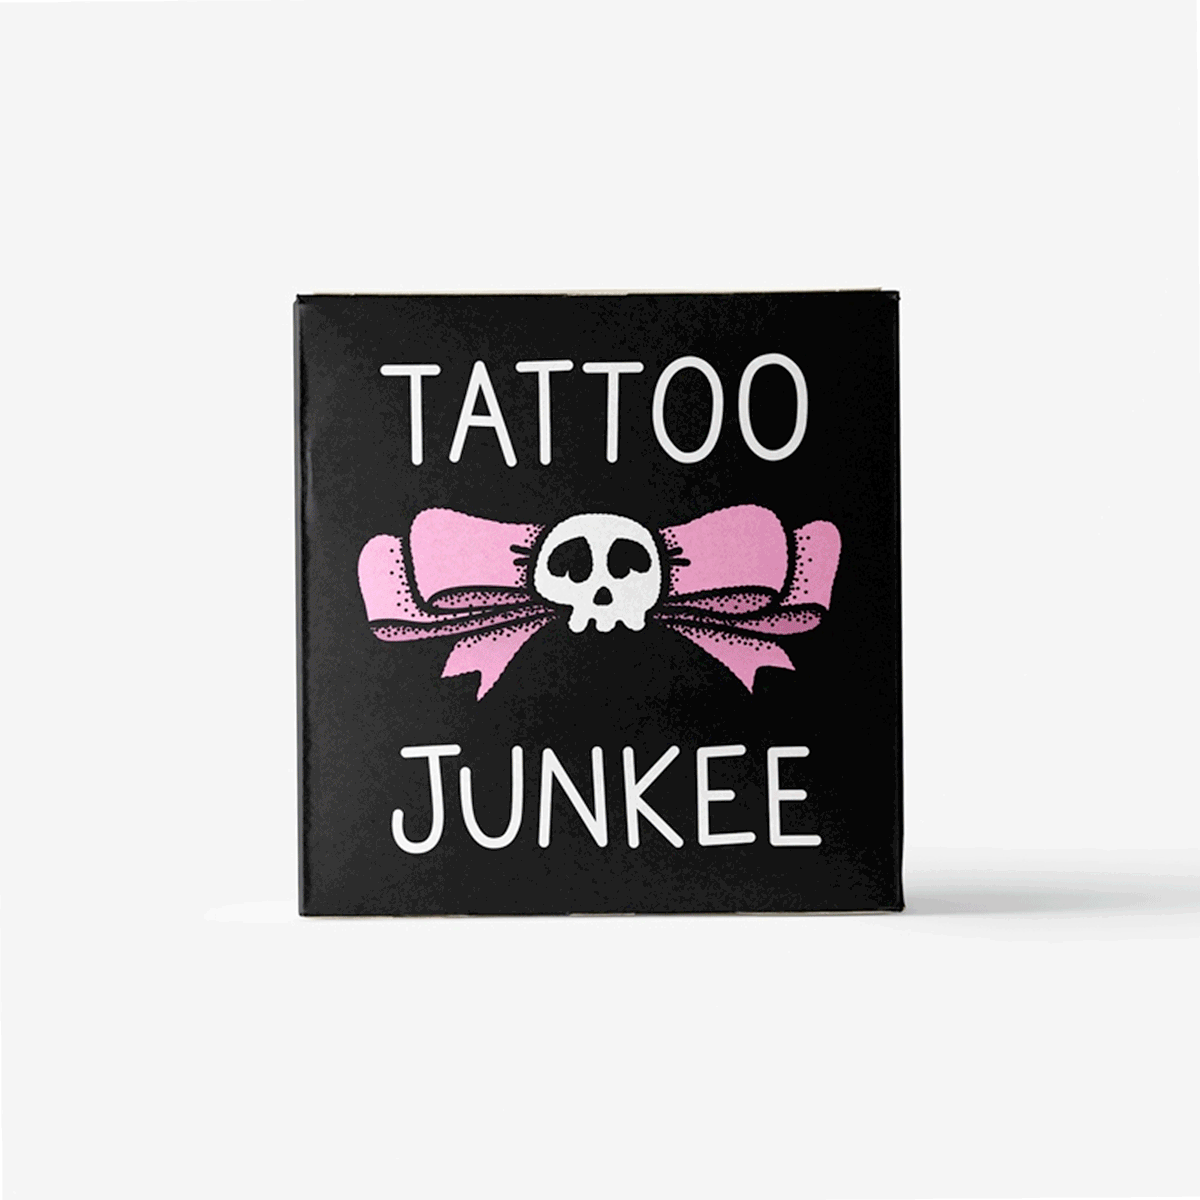 Tattoo Junkee Cosmetics Branding and Packaging